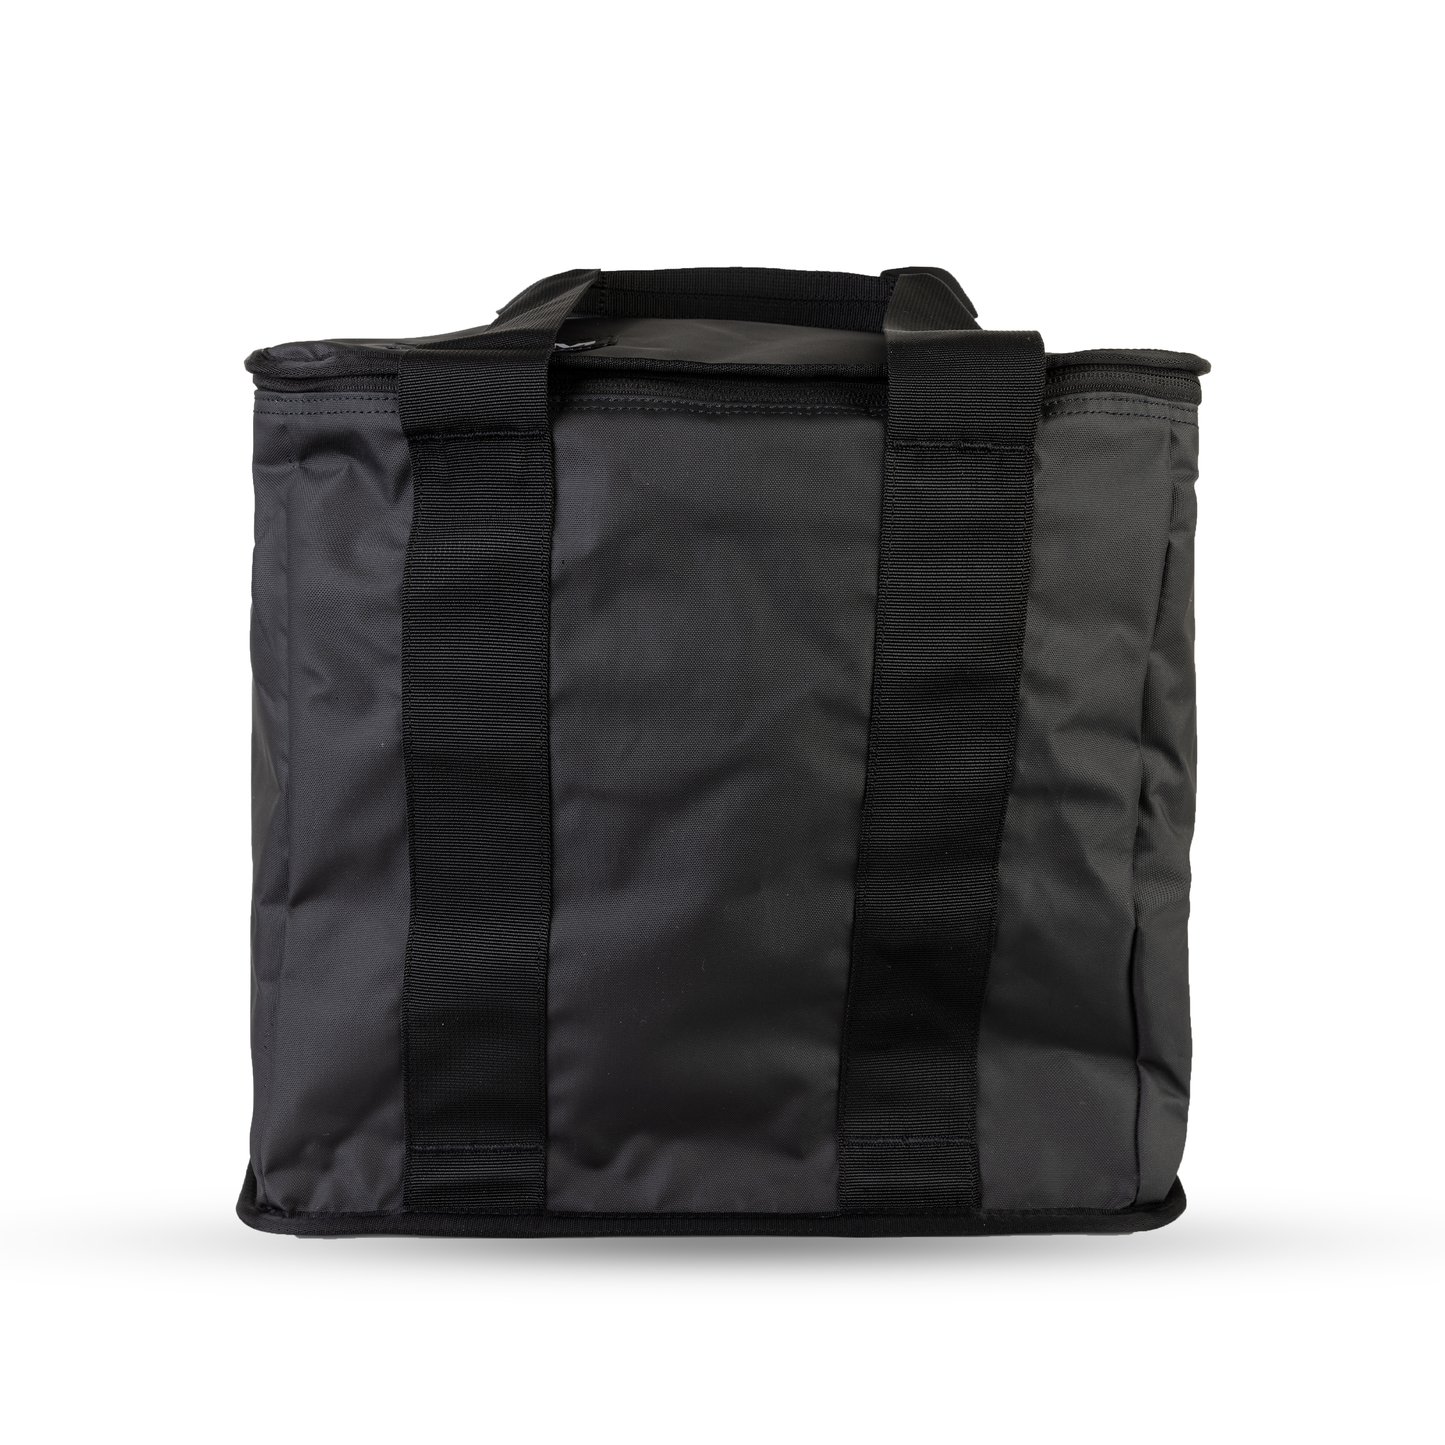 Rugged Bag 1.3 by ROAM Adventure Co.